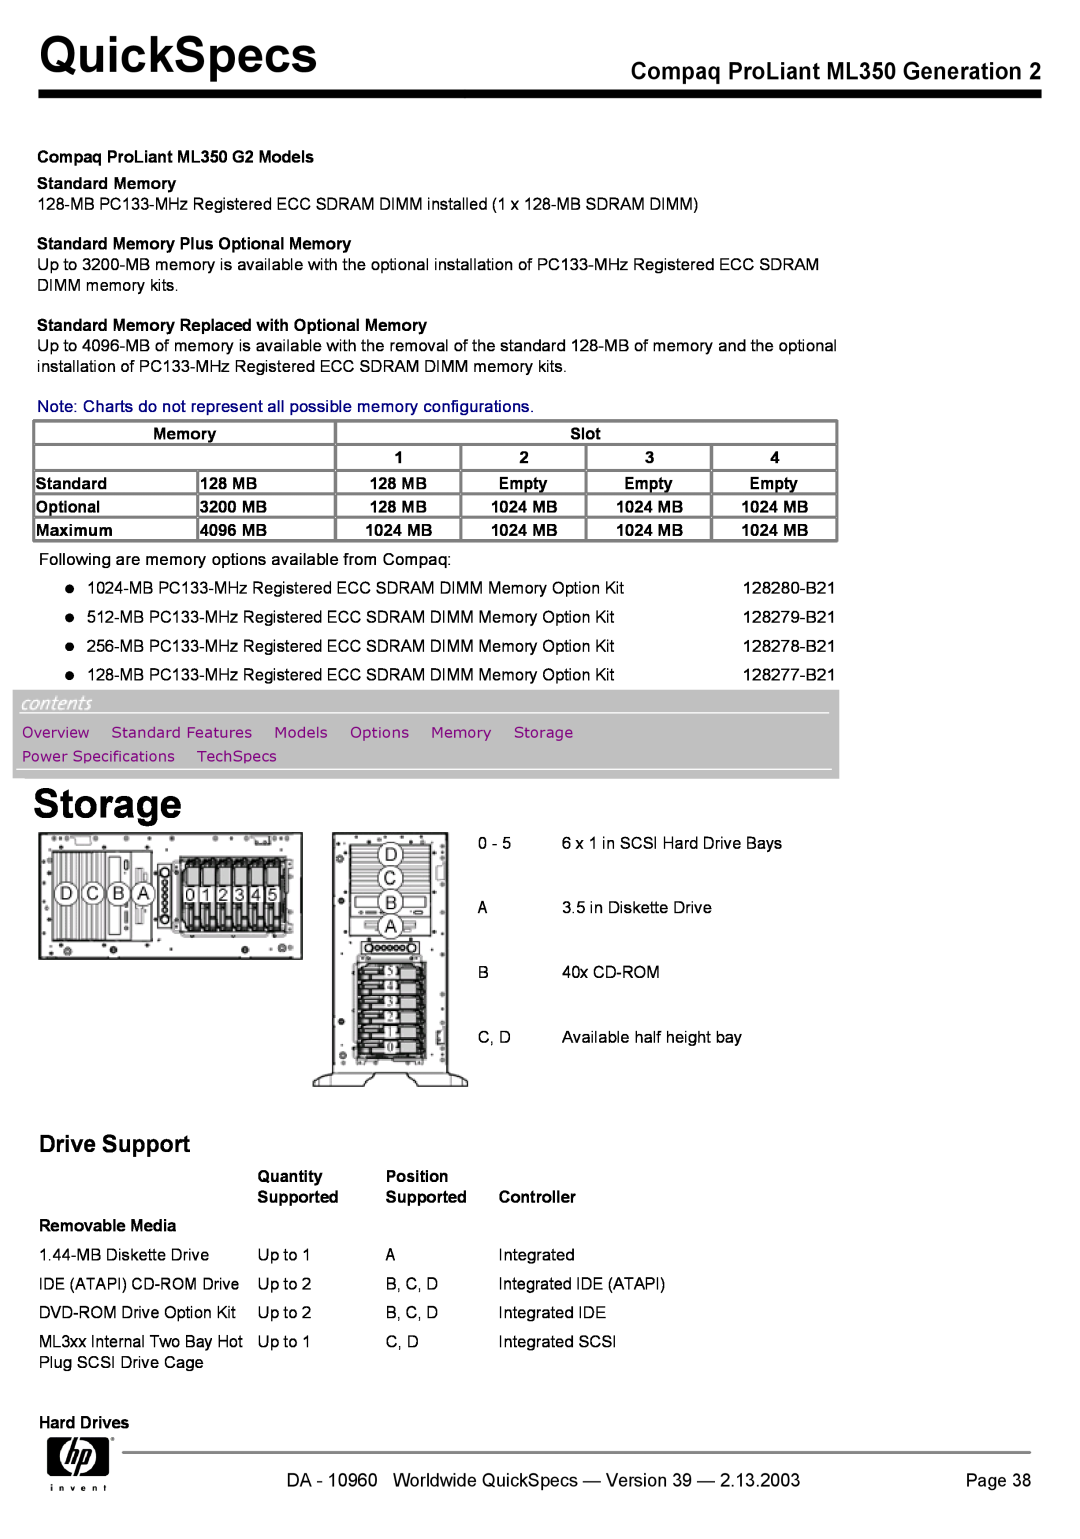 Compaq specifications Storage, Drive Support, QuickSpecs, Compaq ProLiant ML350 Generation, Page 